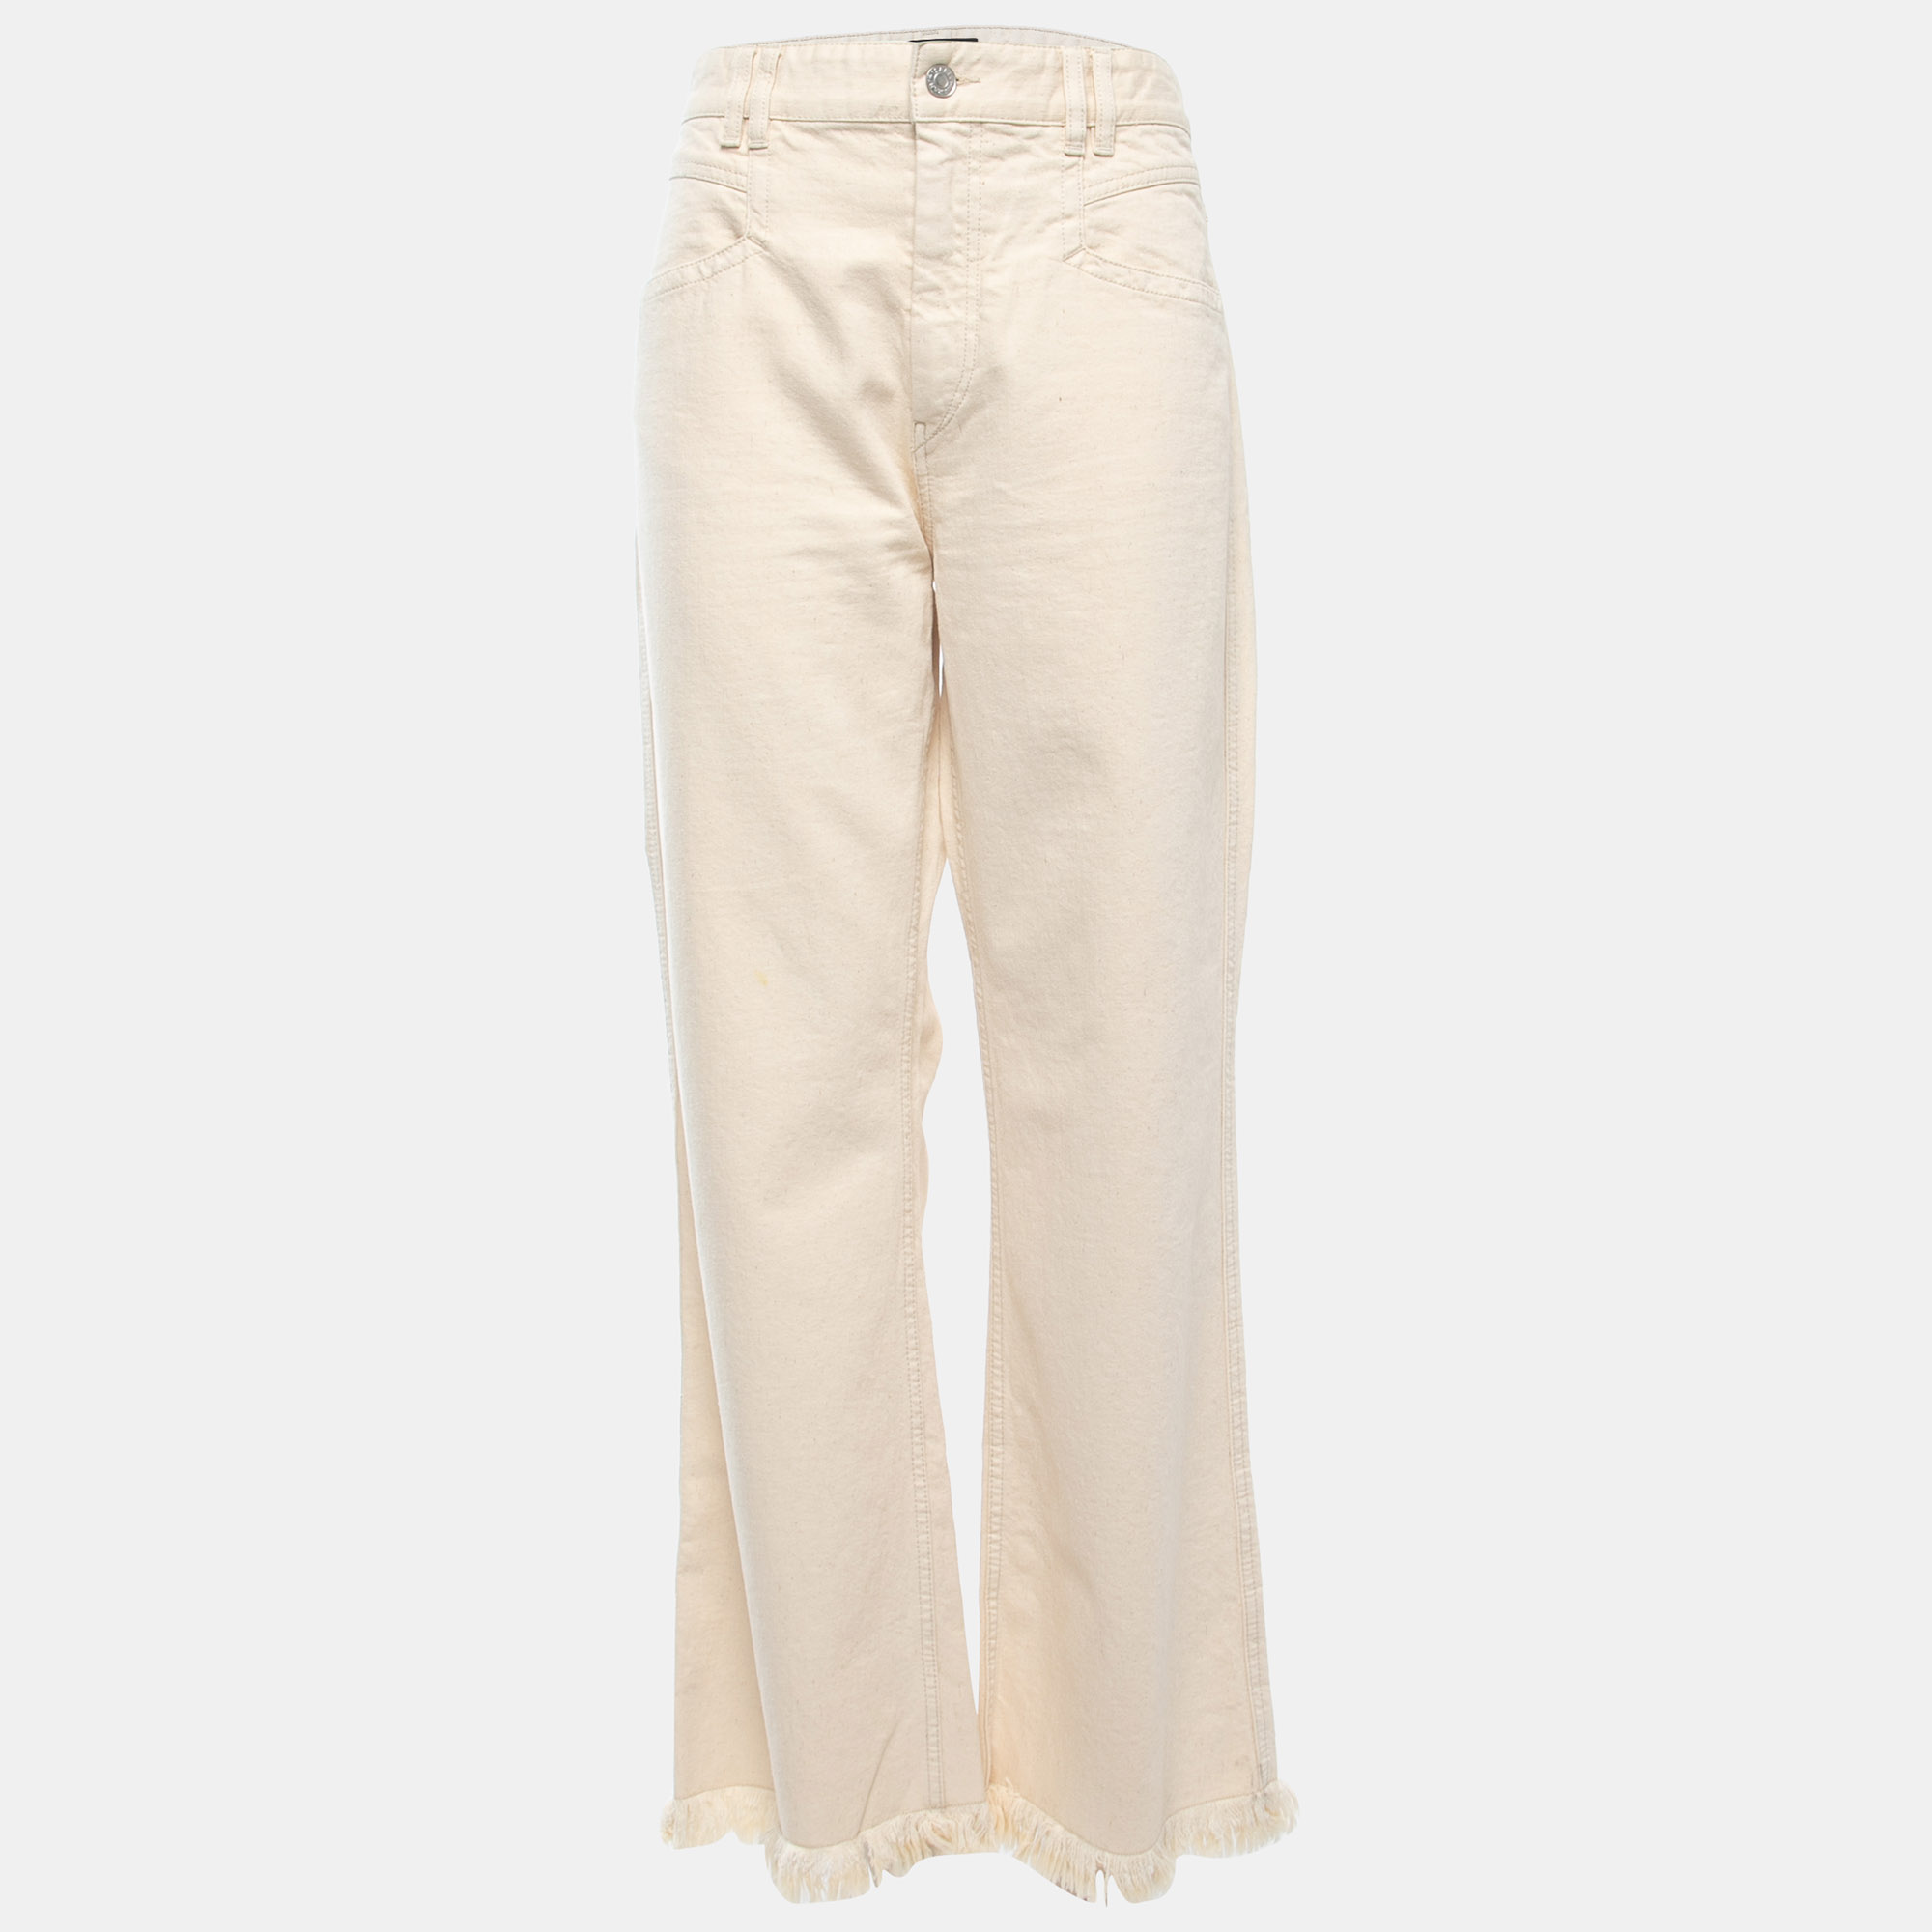 Pre-owned Isabel Marant Cream Denim Frayed Hem Jeans L Waist 32"